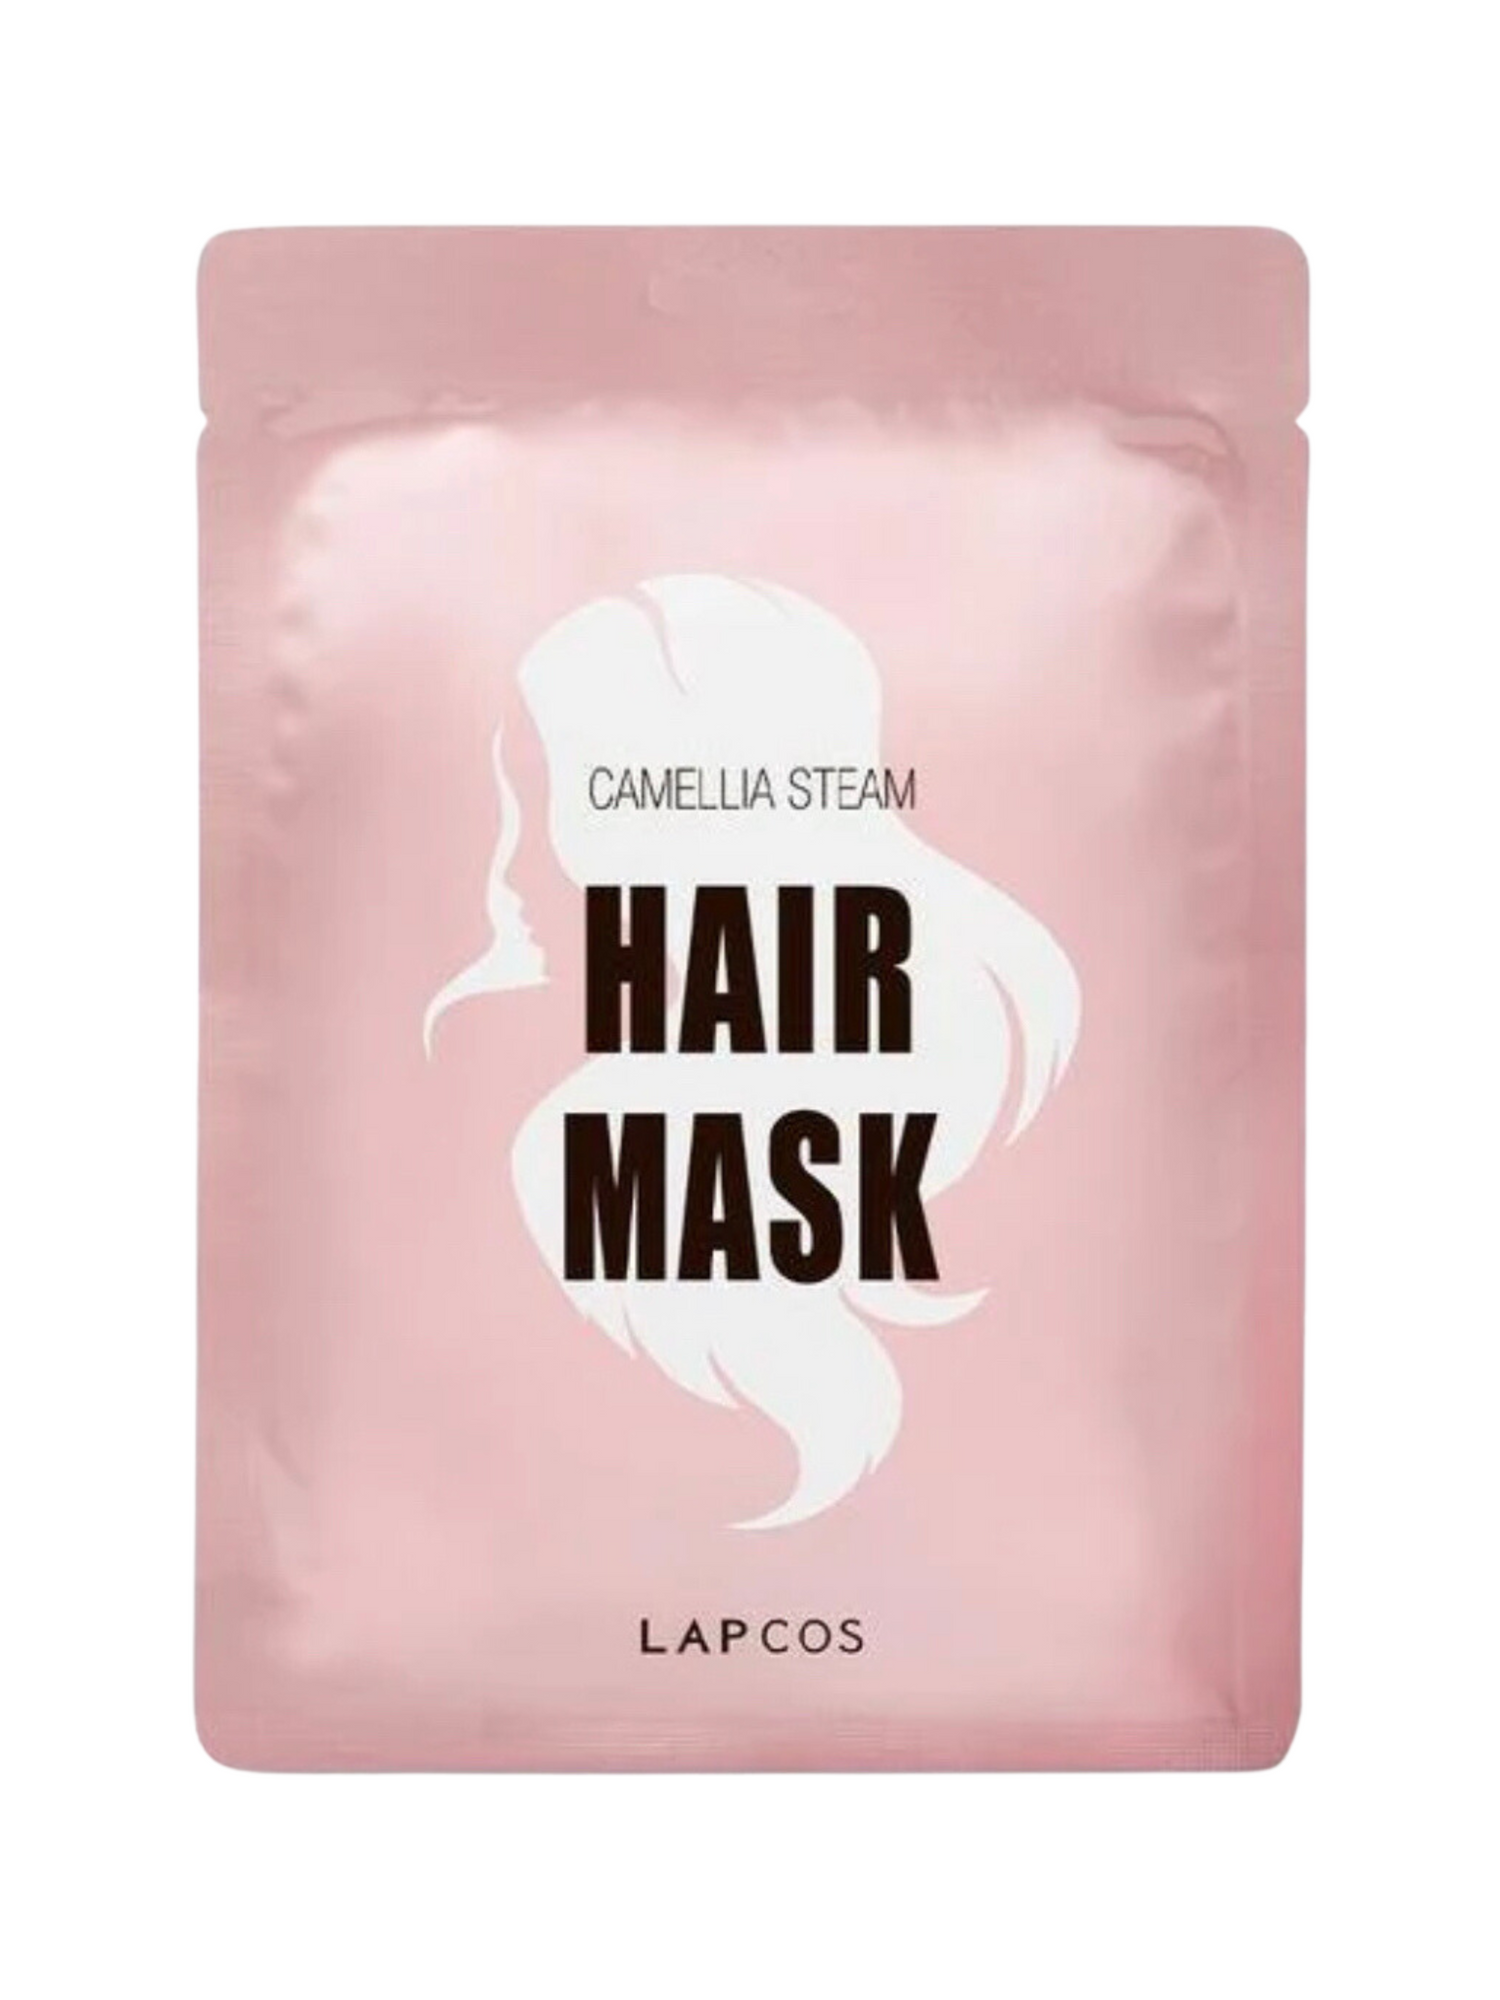 LAPCOS CAMELLIA STEAM HAIR MASK - THE HIP EAGLE BOUTIQUE